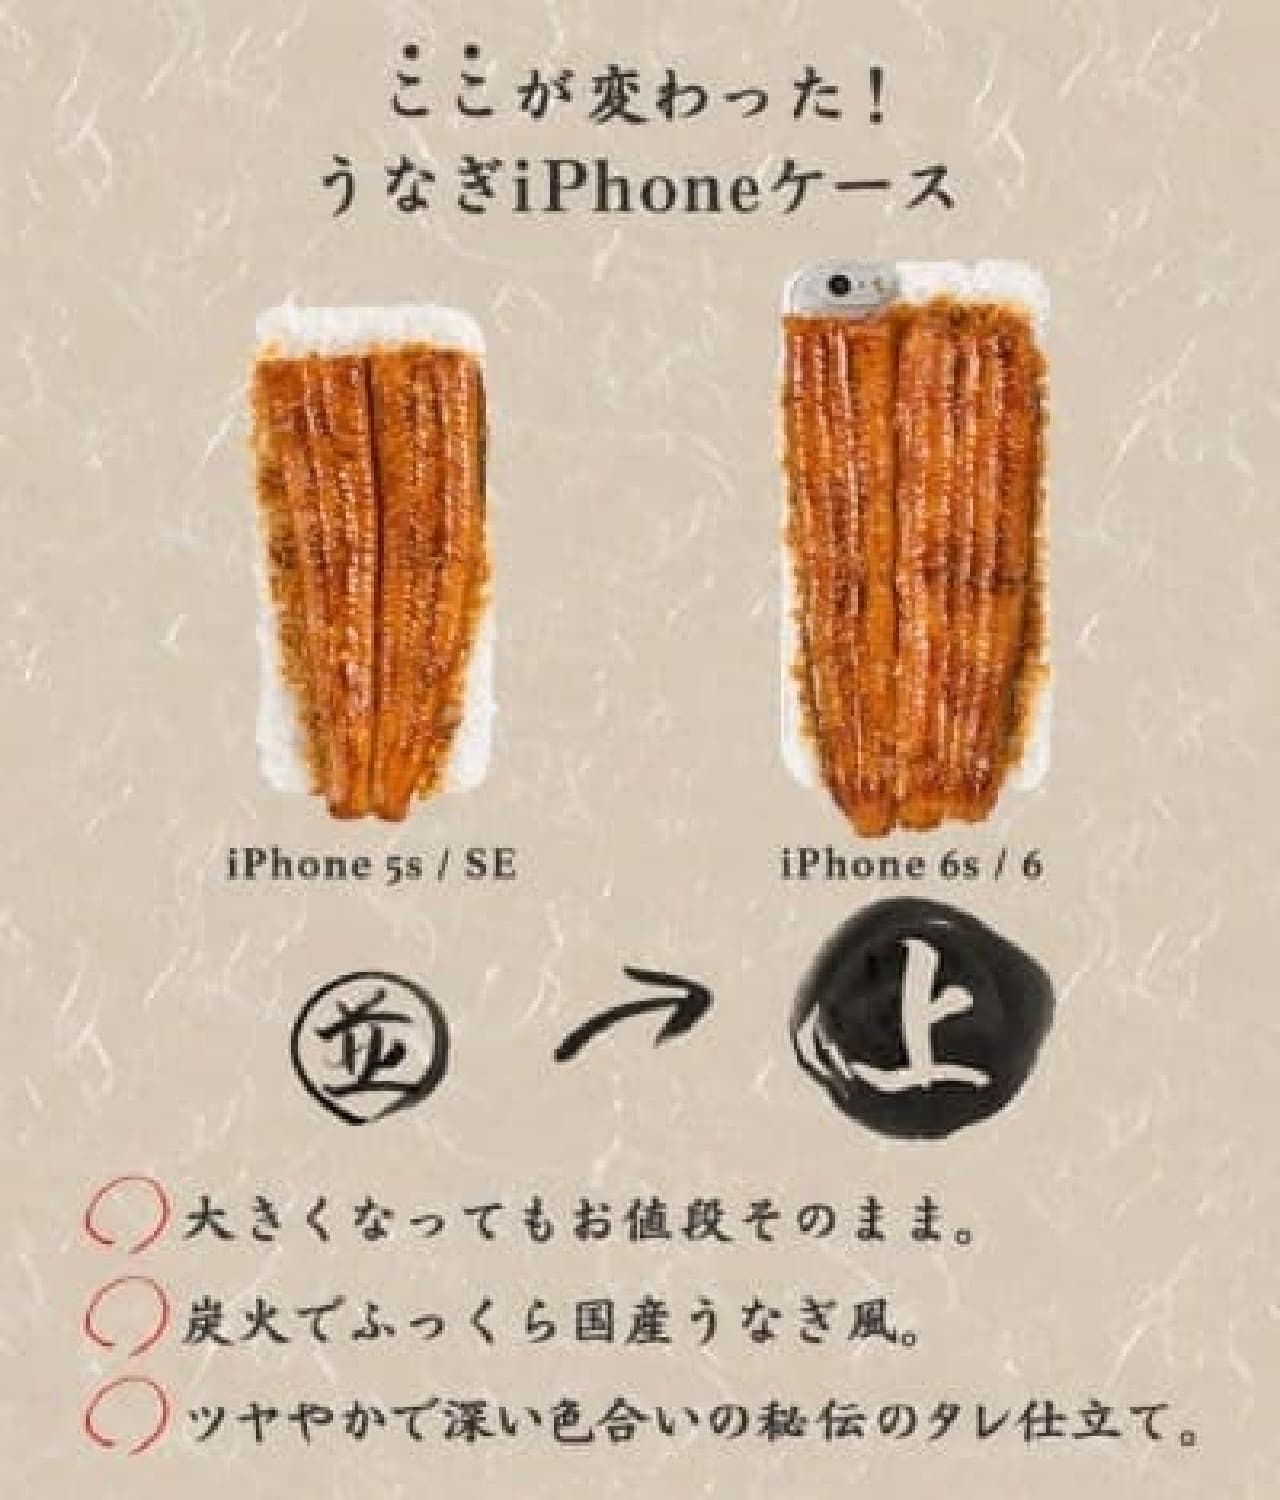 Hamee "Food sample cover for iPhone 6s / 6 (domestic eel kabayaki)"